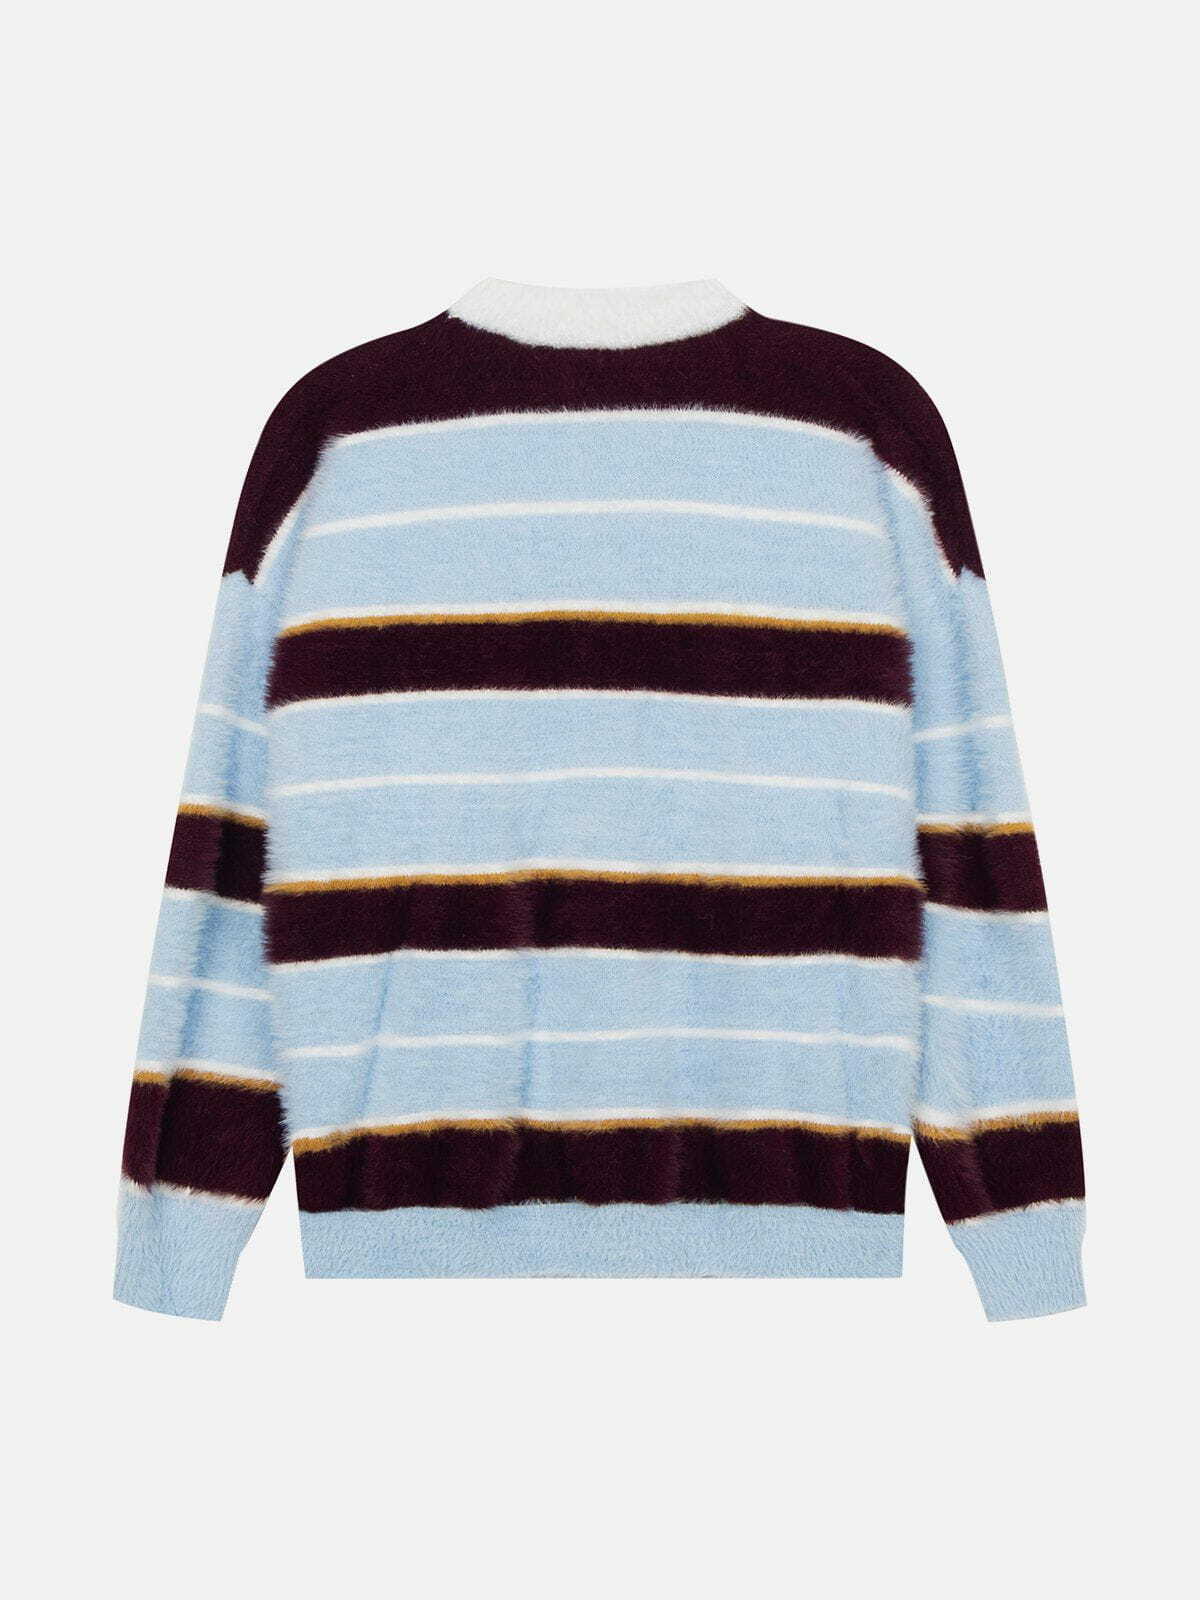 colorful striped knit sweater retro chic statement 6308